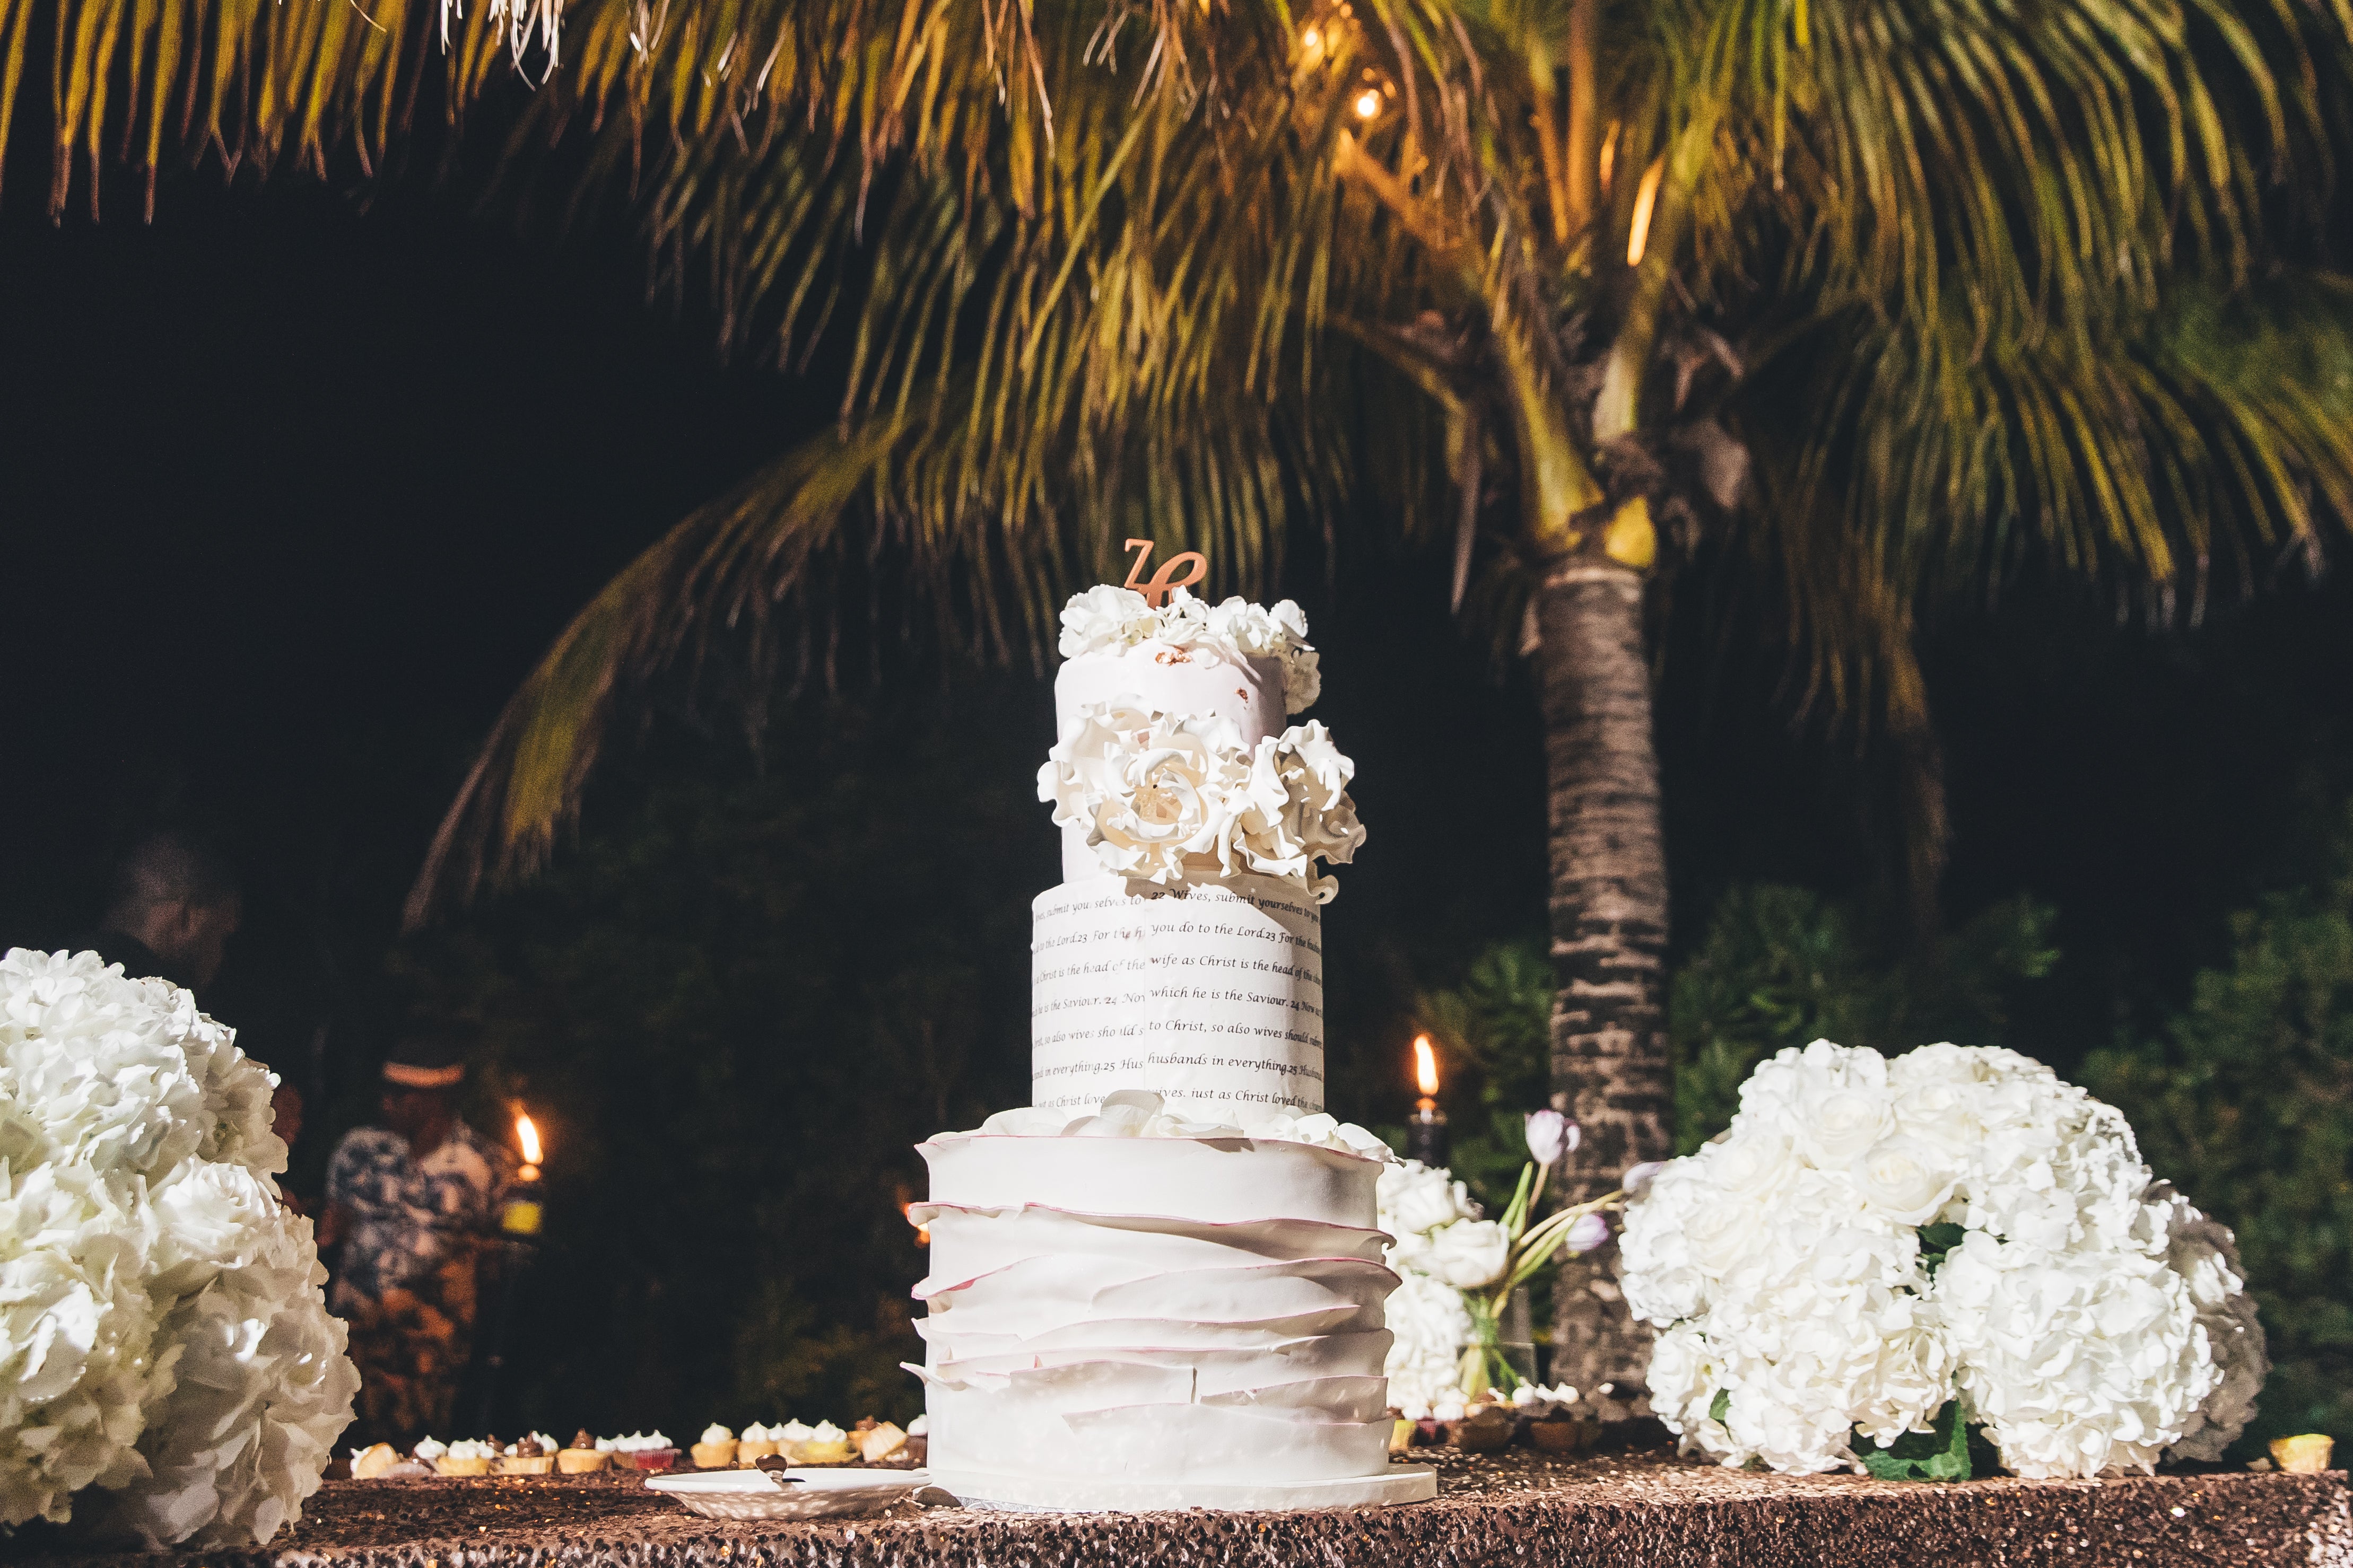 Bridal Bliss: Ian And Zemi's Island Chic Bahamas Wedding Will Take Your Breath Away
